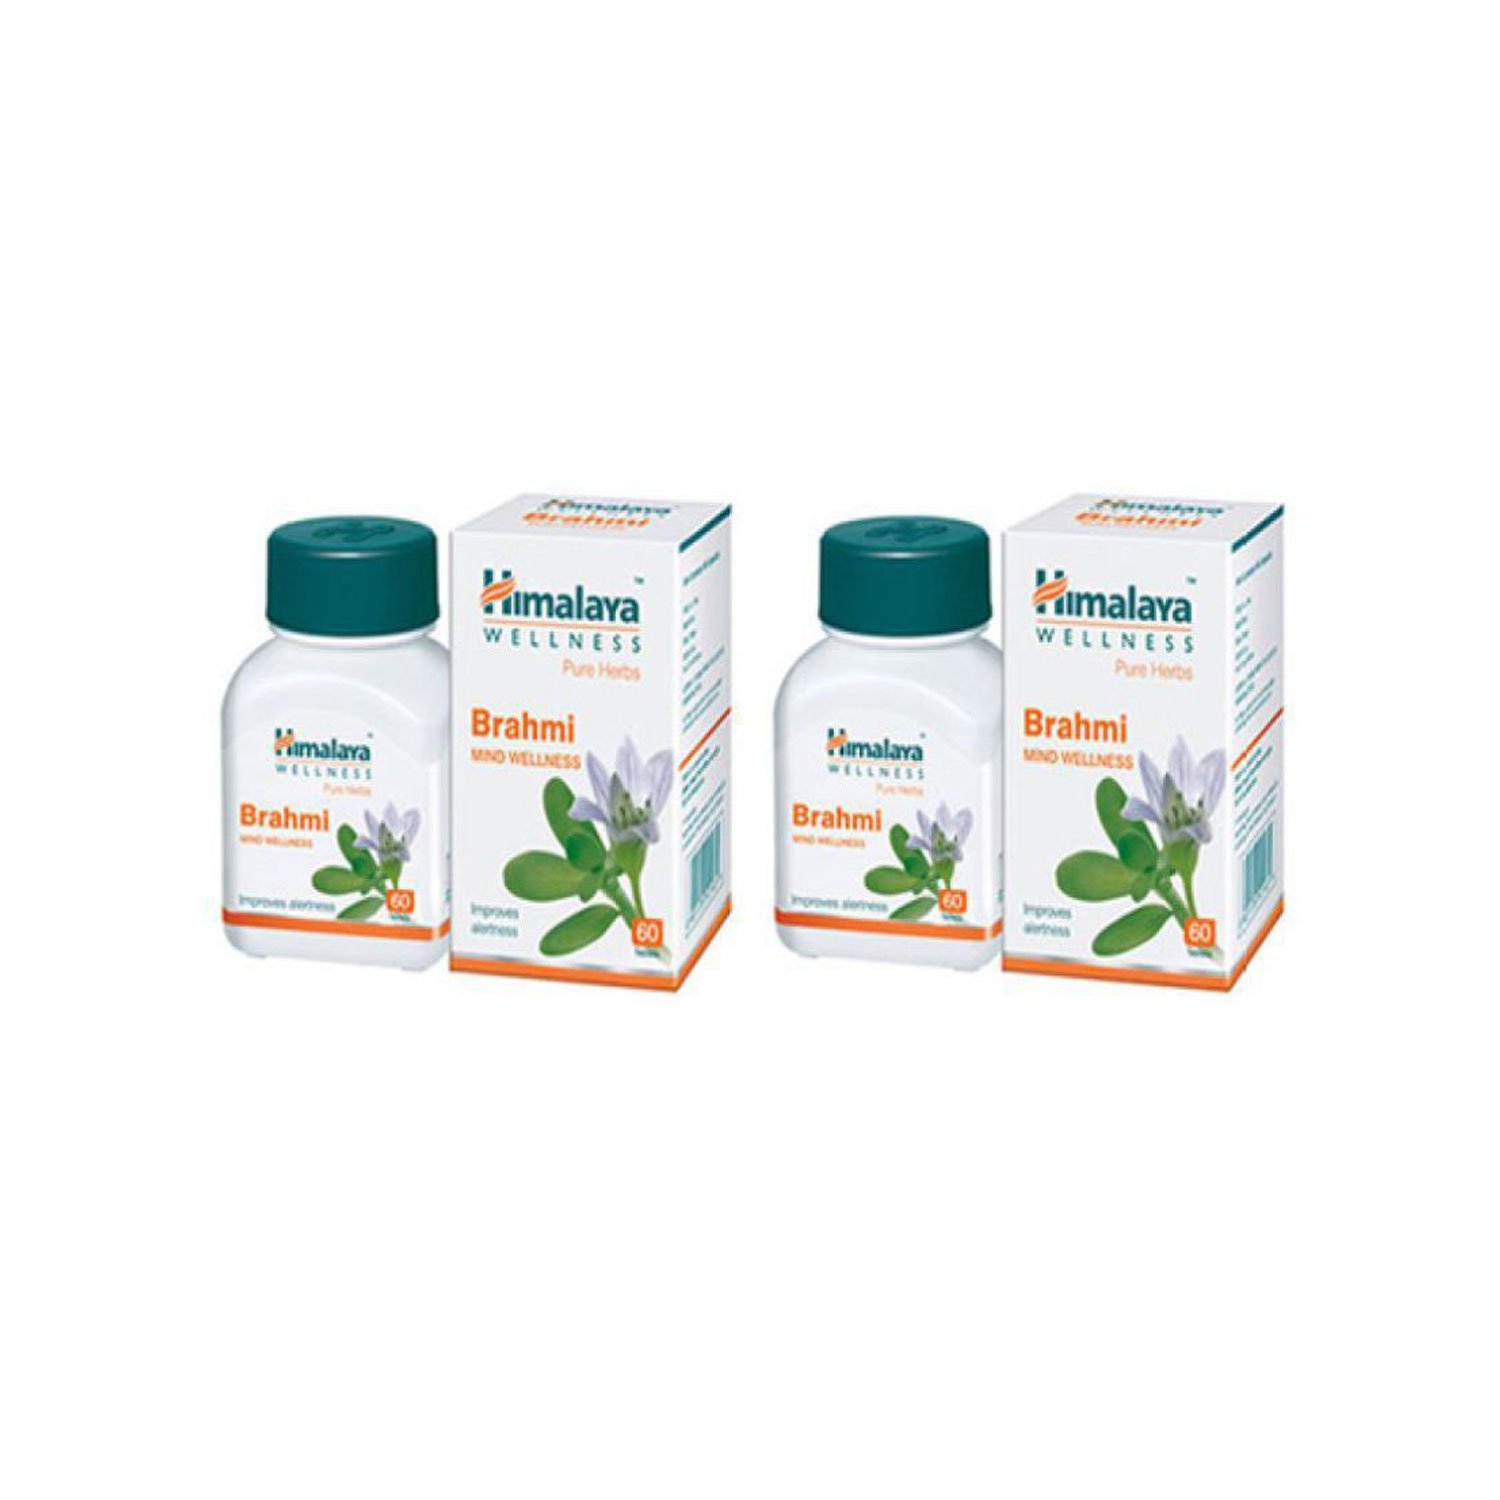 Himalaya Wellness Brahmi - 60 Tablets (Pack of 2)